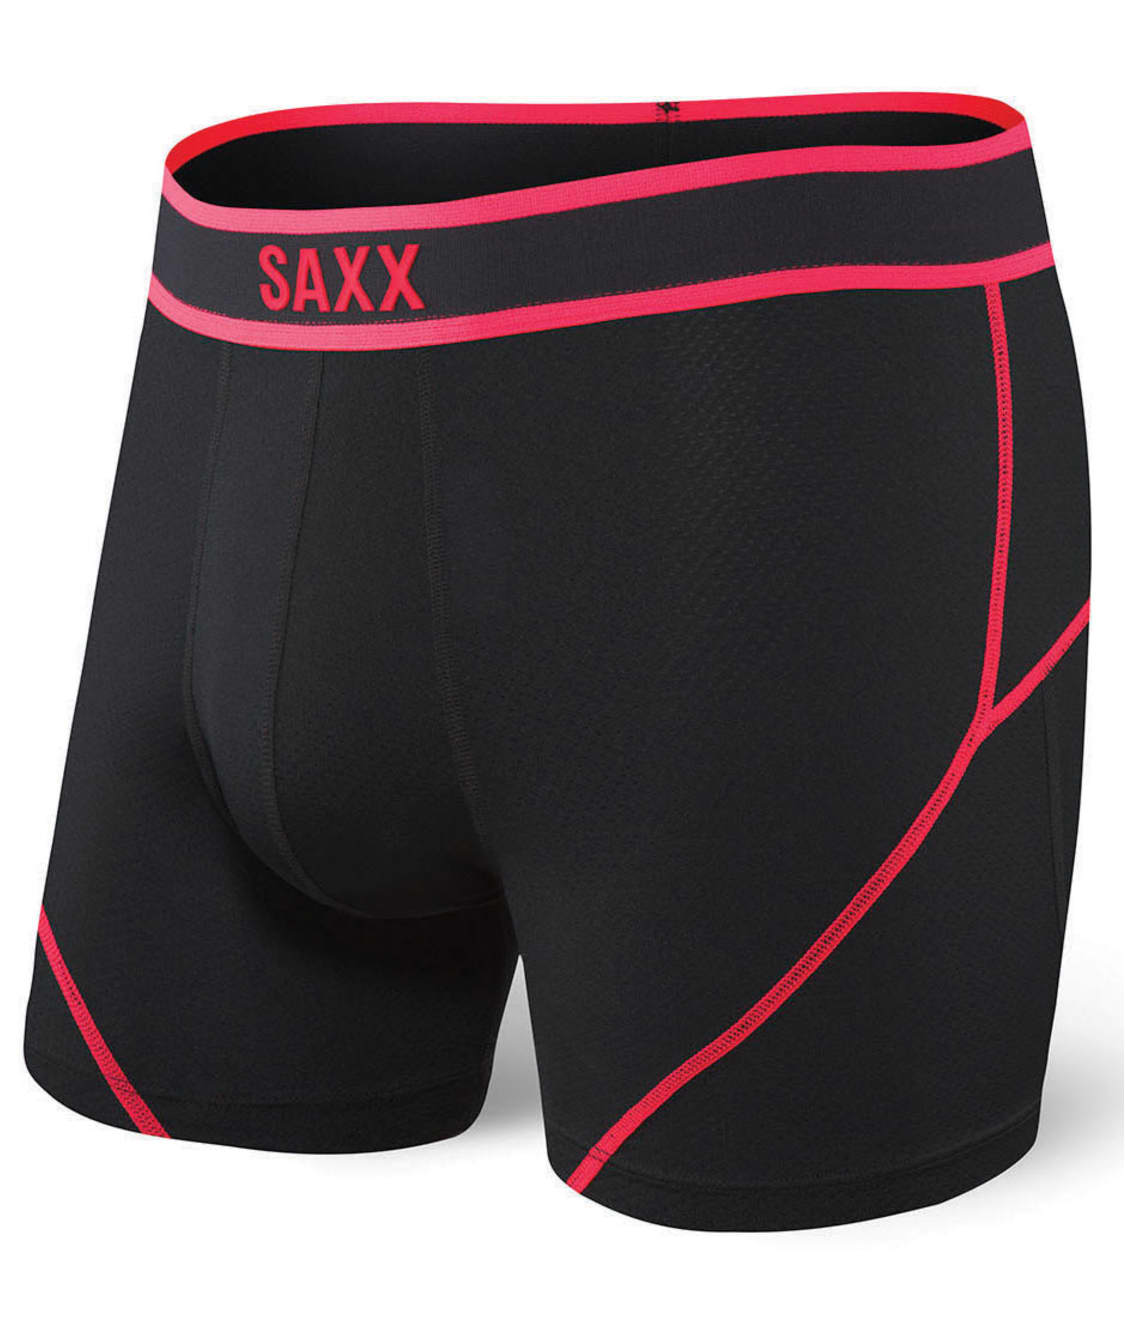 SAXX Kinetic Boxer Brief & Reviews